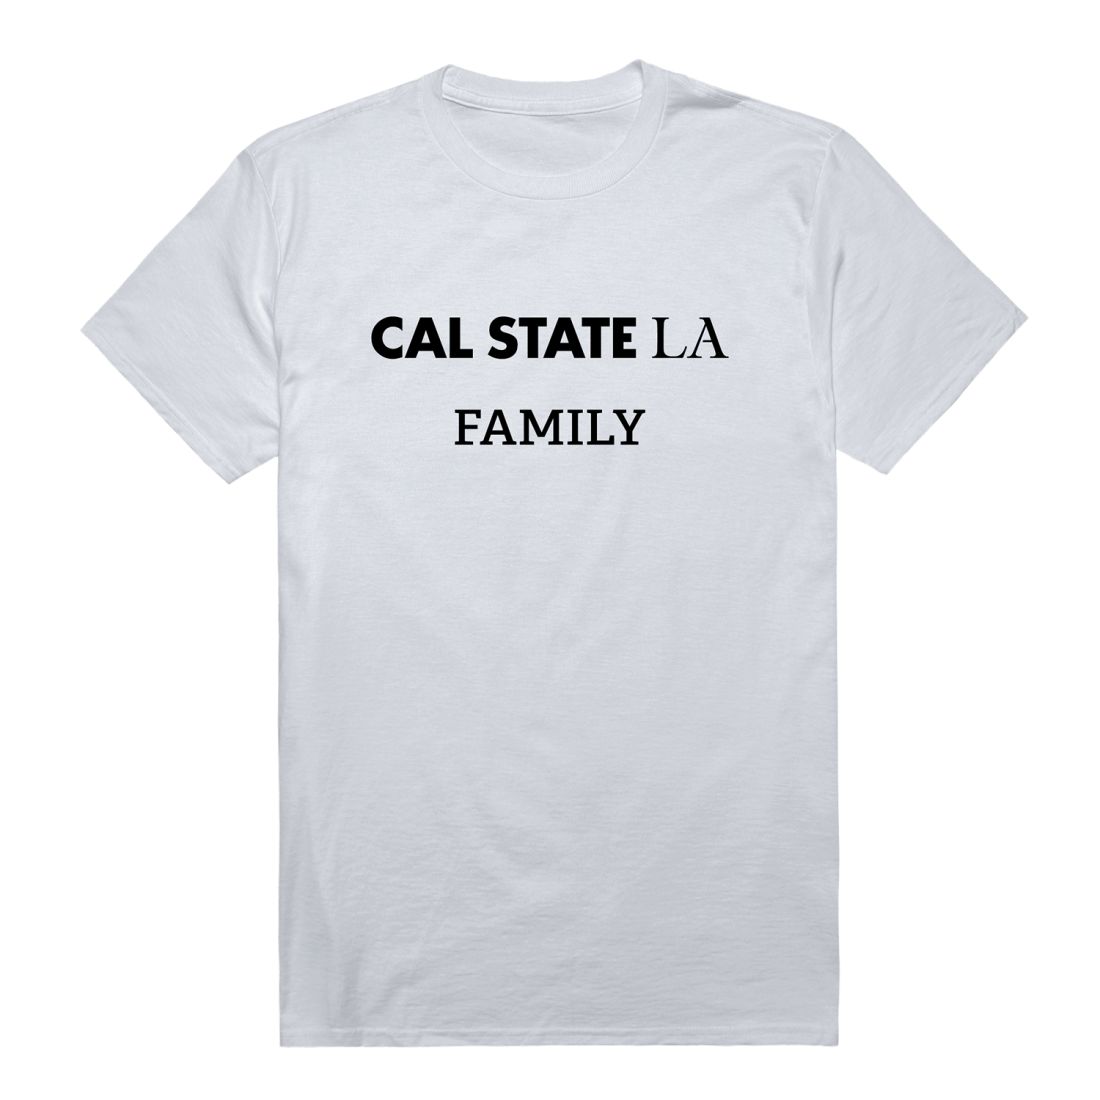 California State University Los Angeles Golden Eagles Family T-Shirt